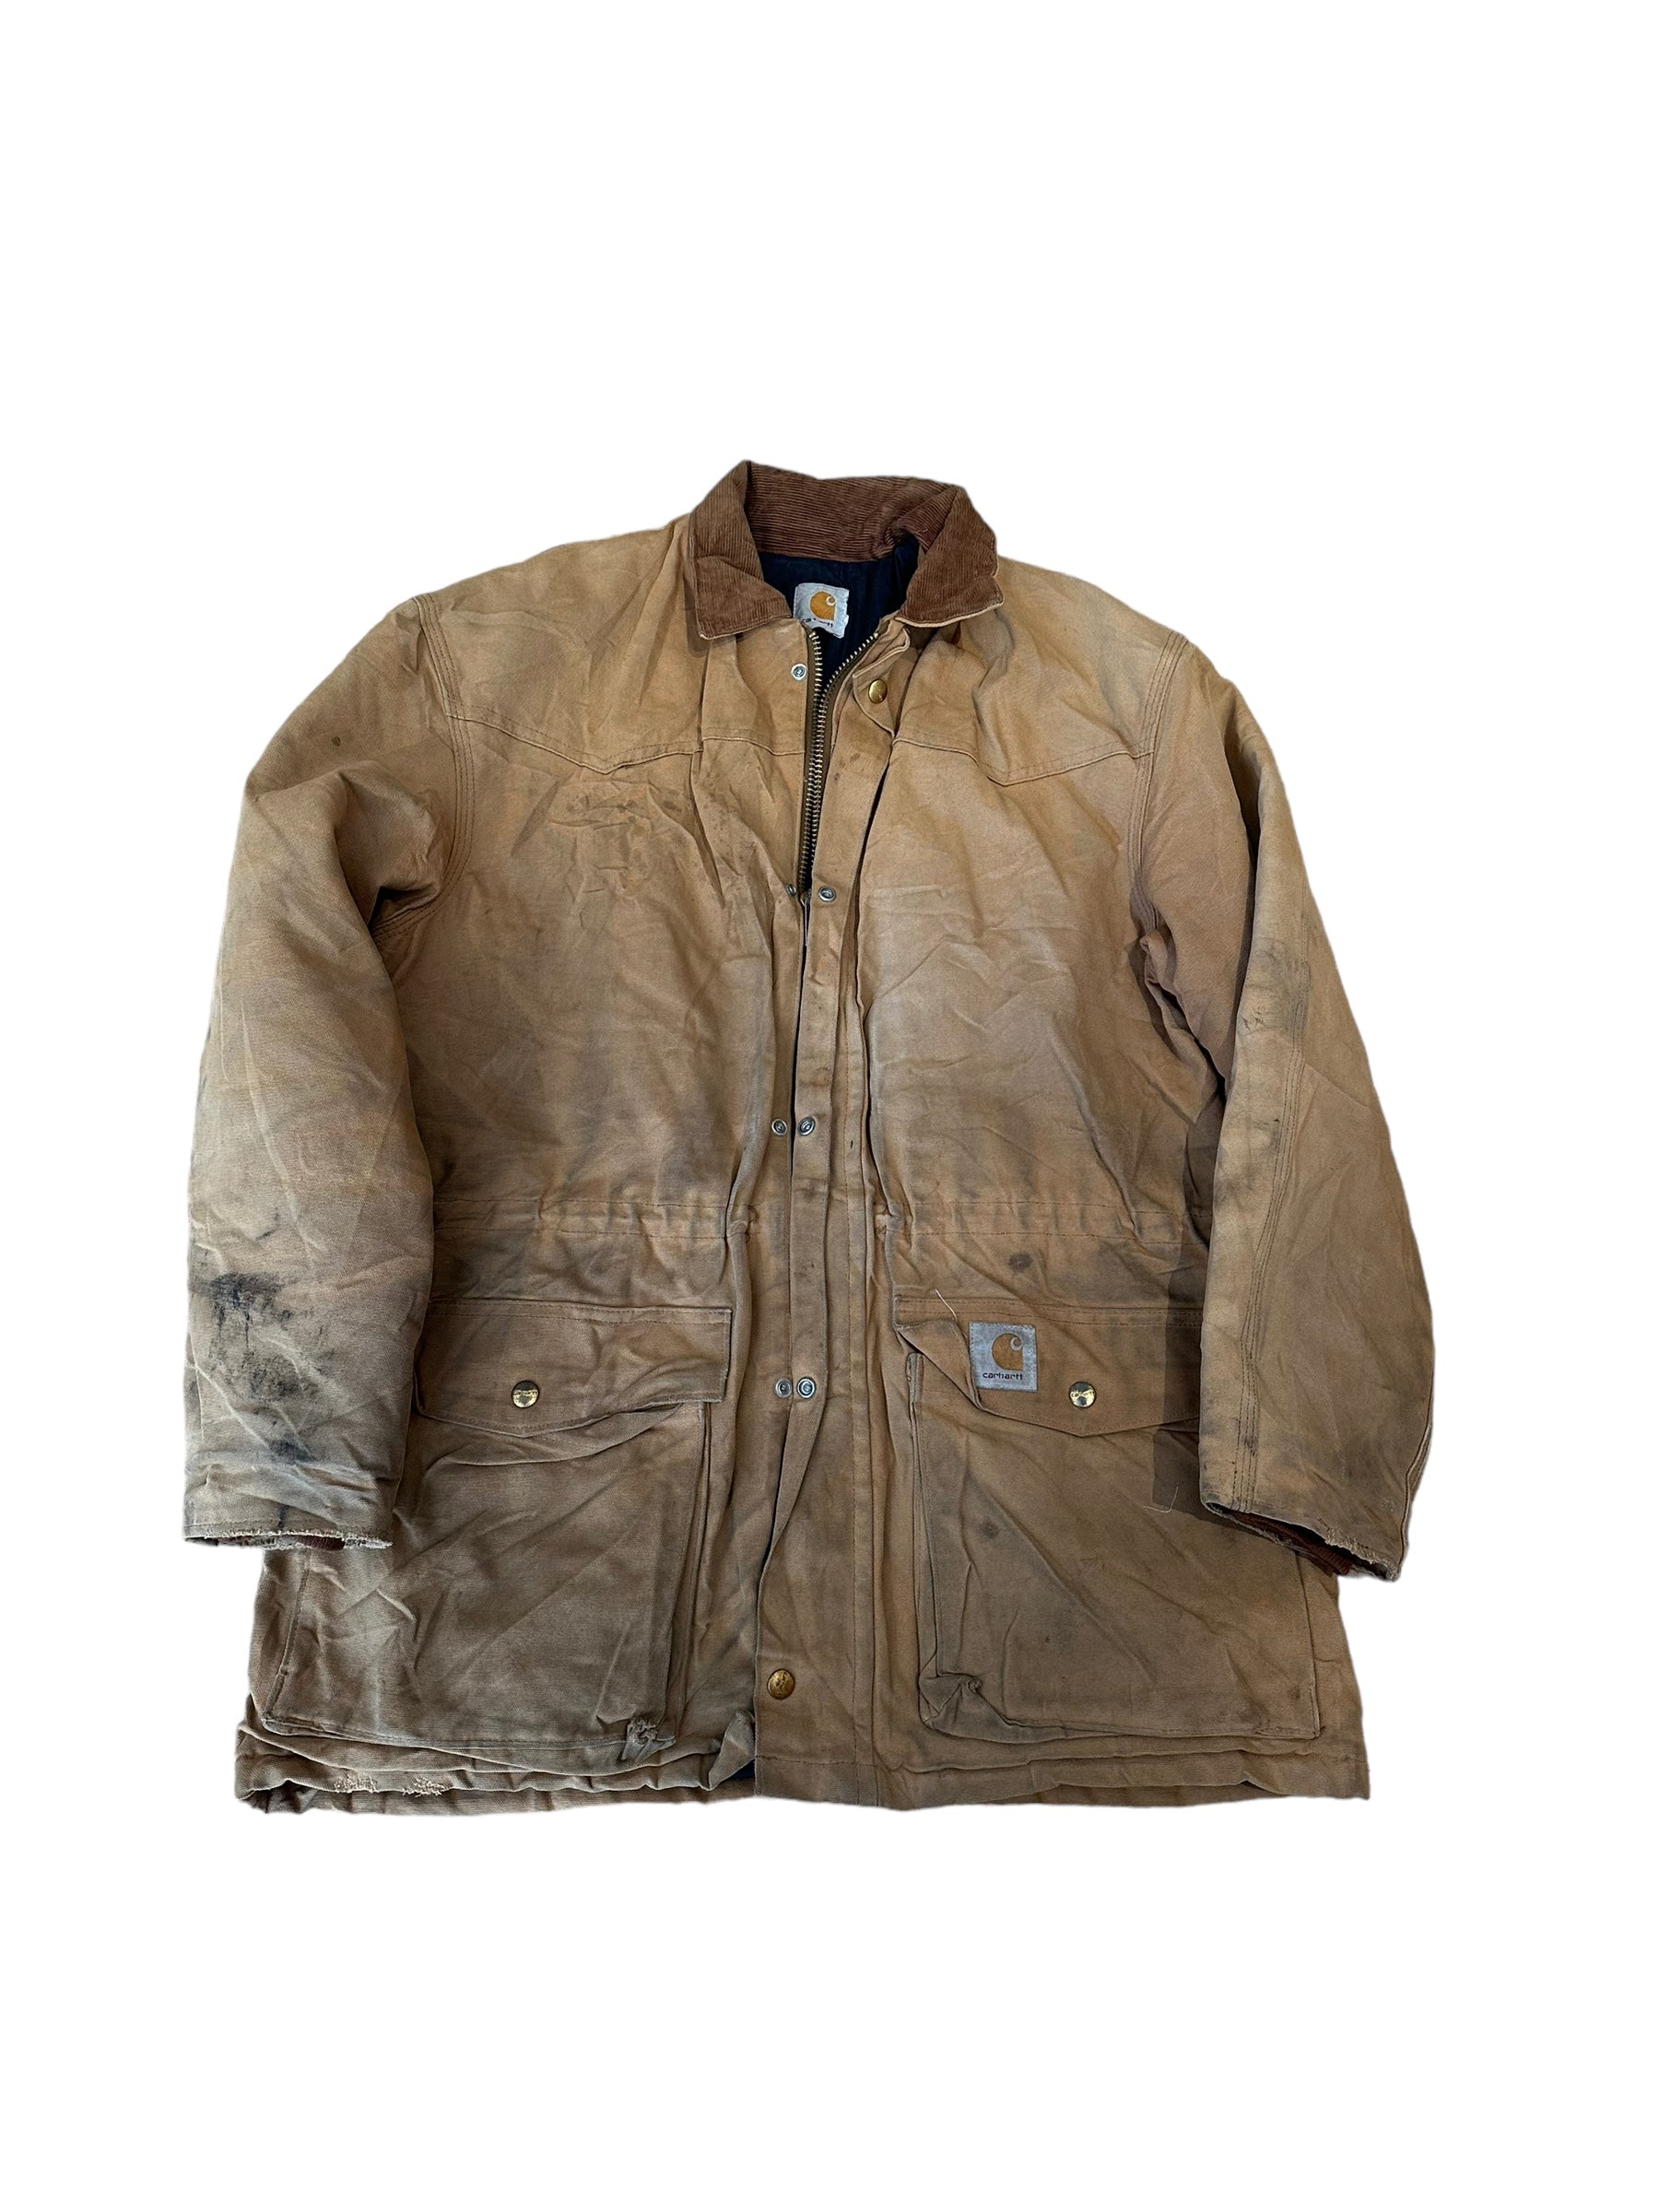 Vintage Carhartt Jacket L